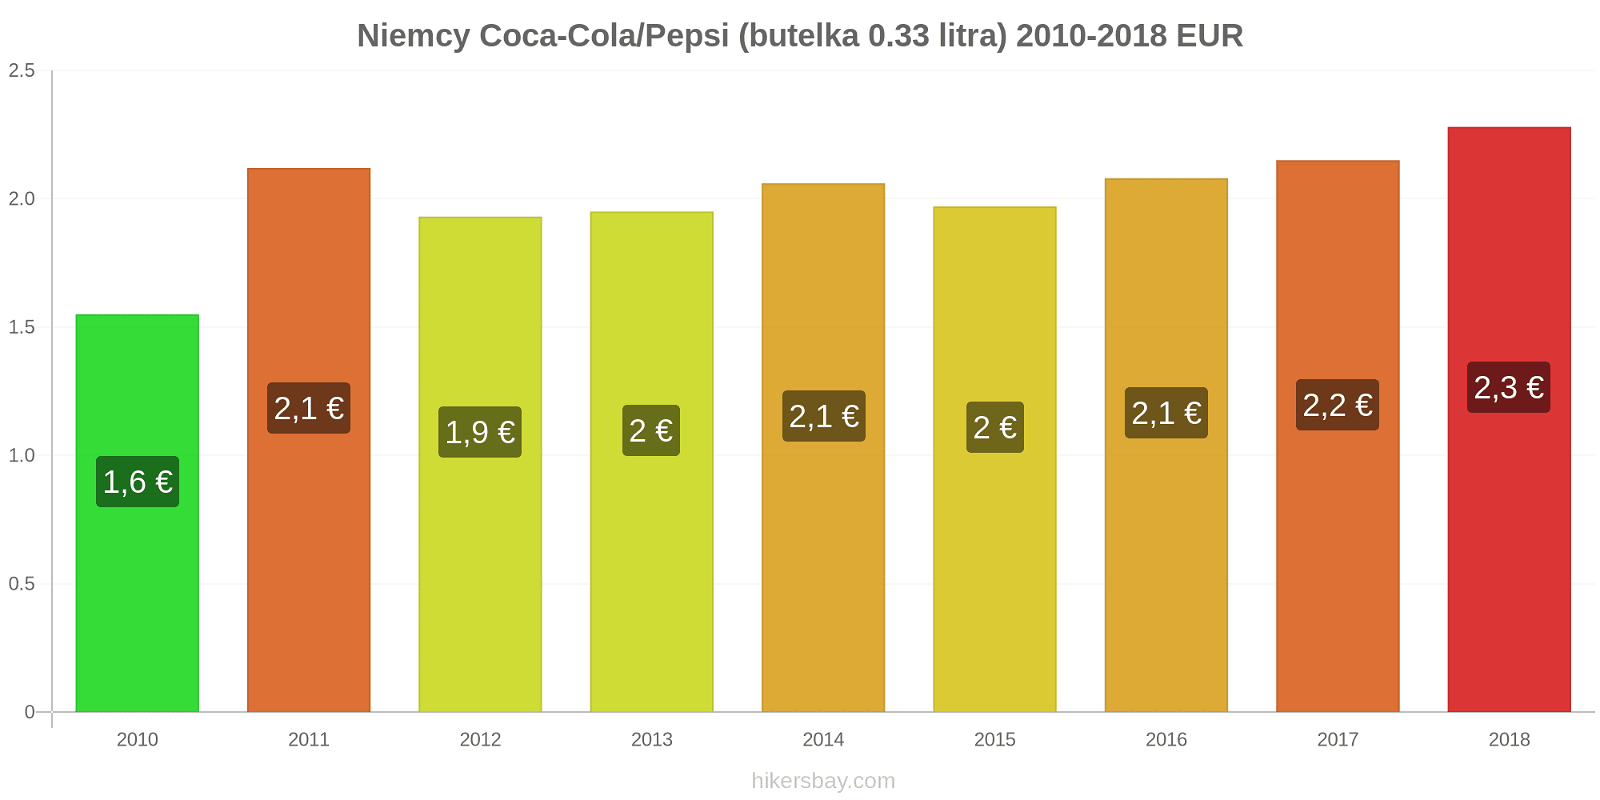 Niemcy zmiany cen Coca-Cola/Pepsi (butelka 0.33 litra) hikersbay.com